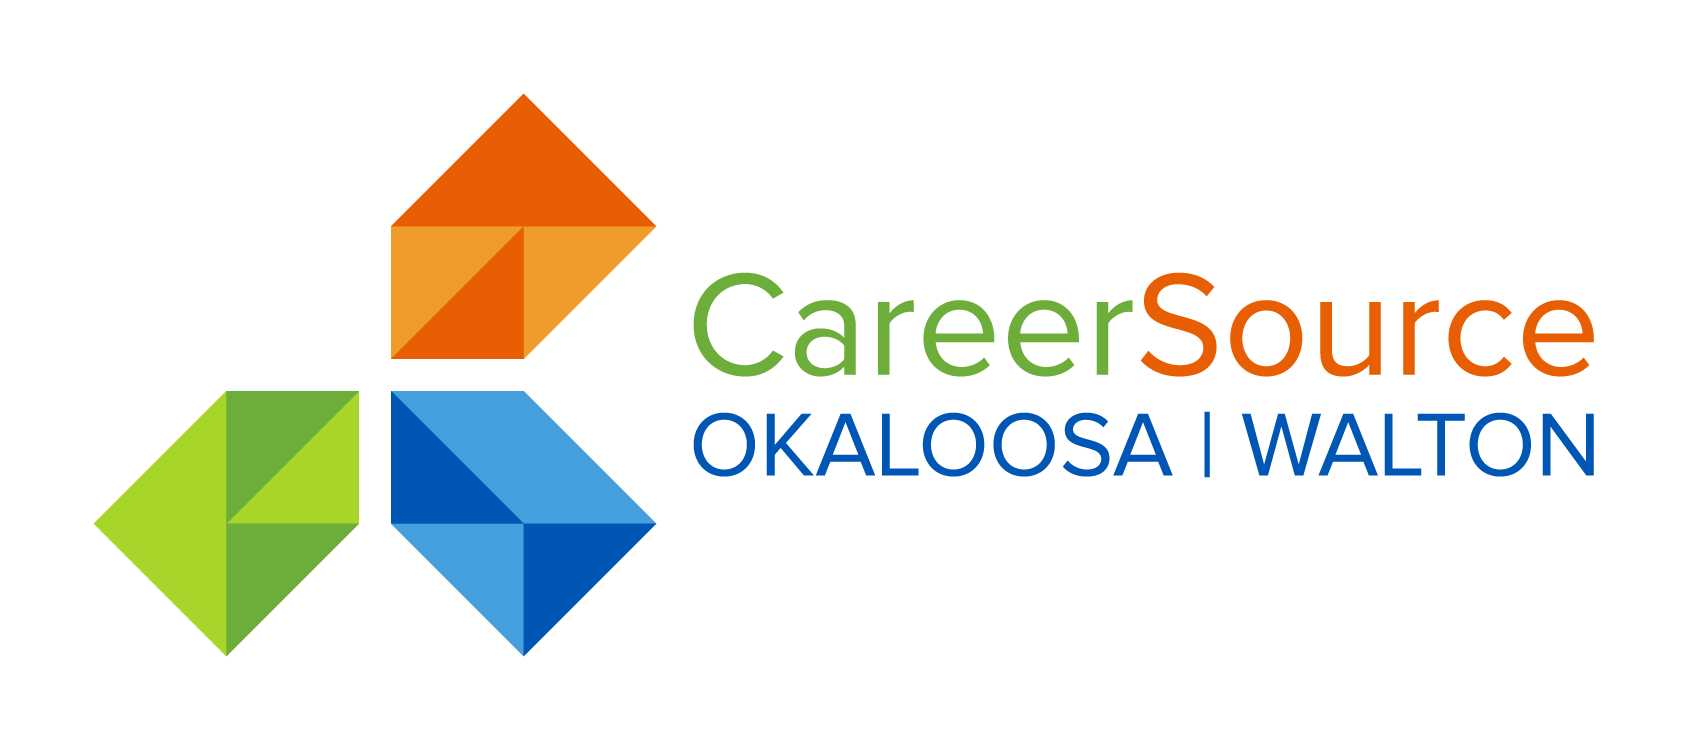 CareerSource Okaloosa Walton logo